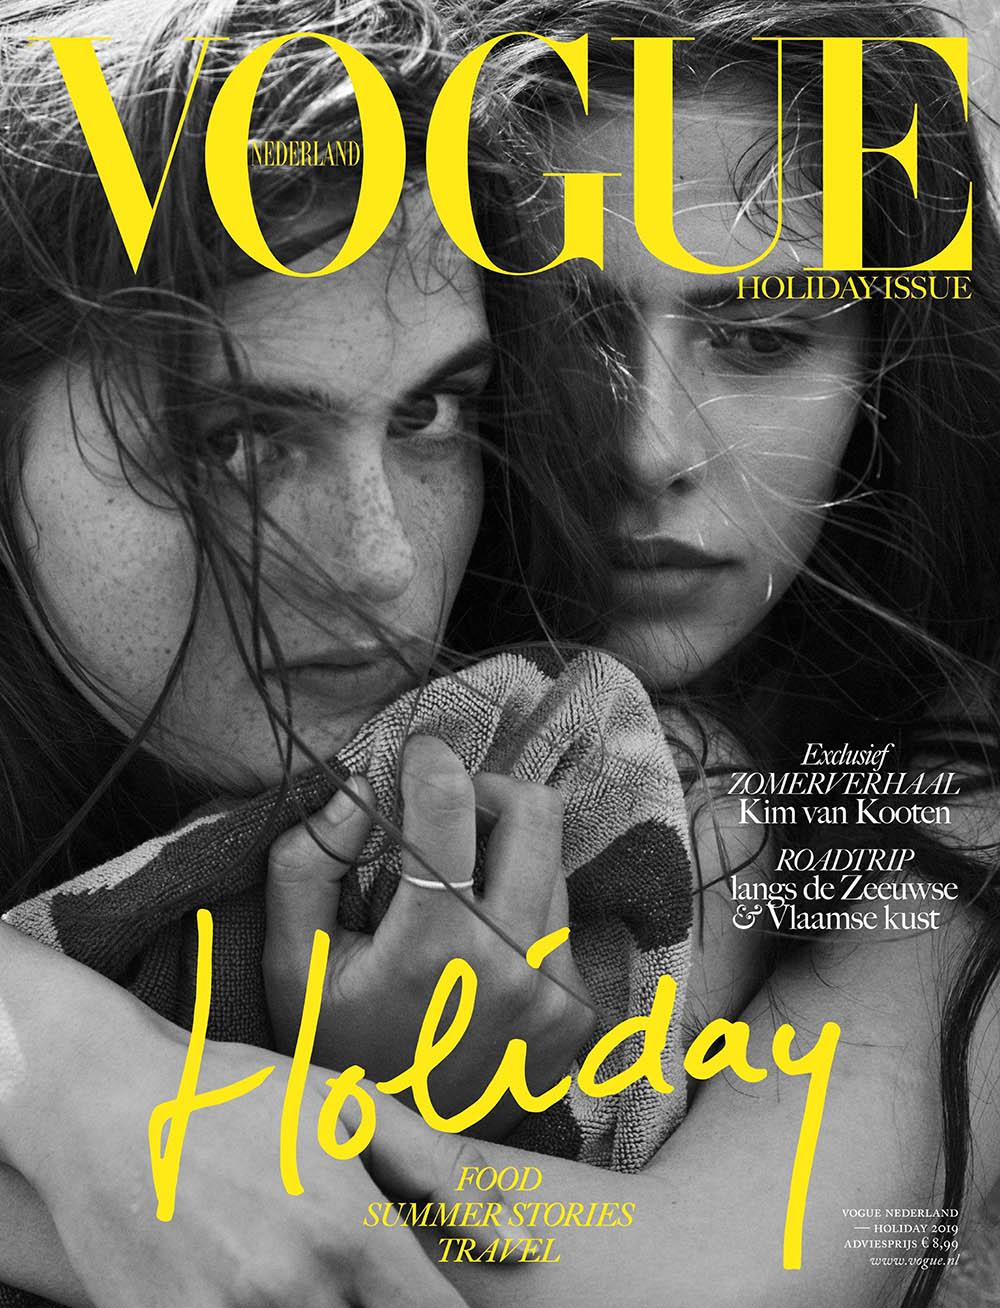 Jip Ter Laak & Jools Verschuuren Cover Vogue Netherlands Holiday 2019